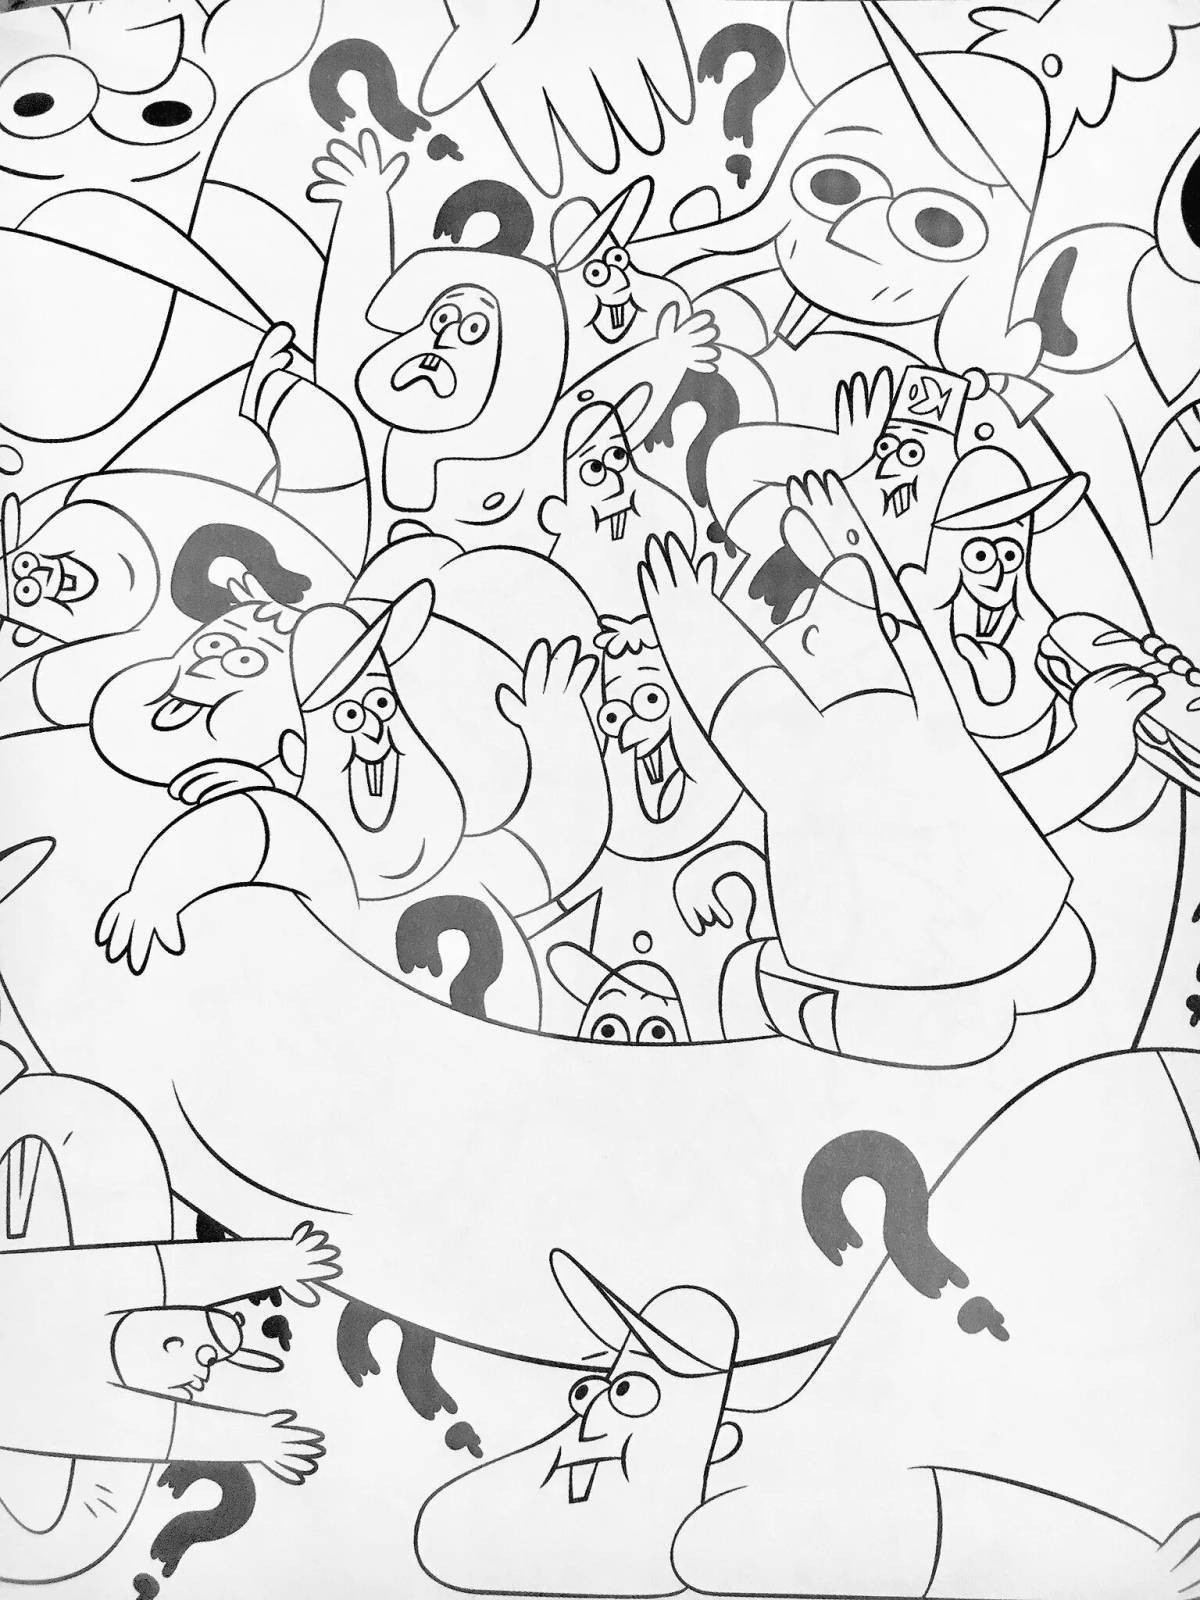 Gravity Falls fun anti-stress coloring book